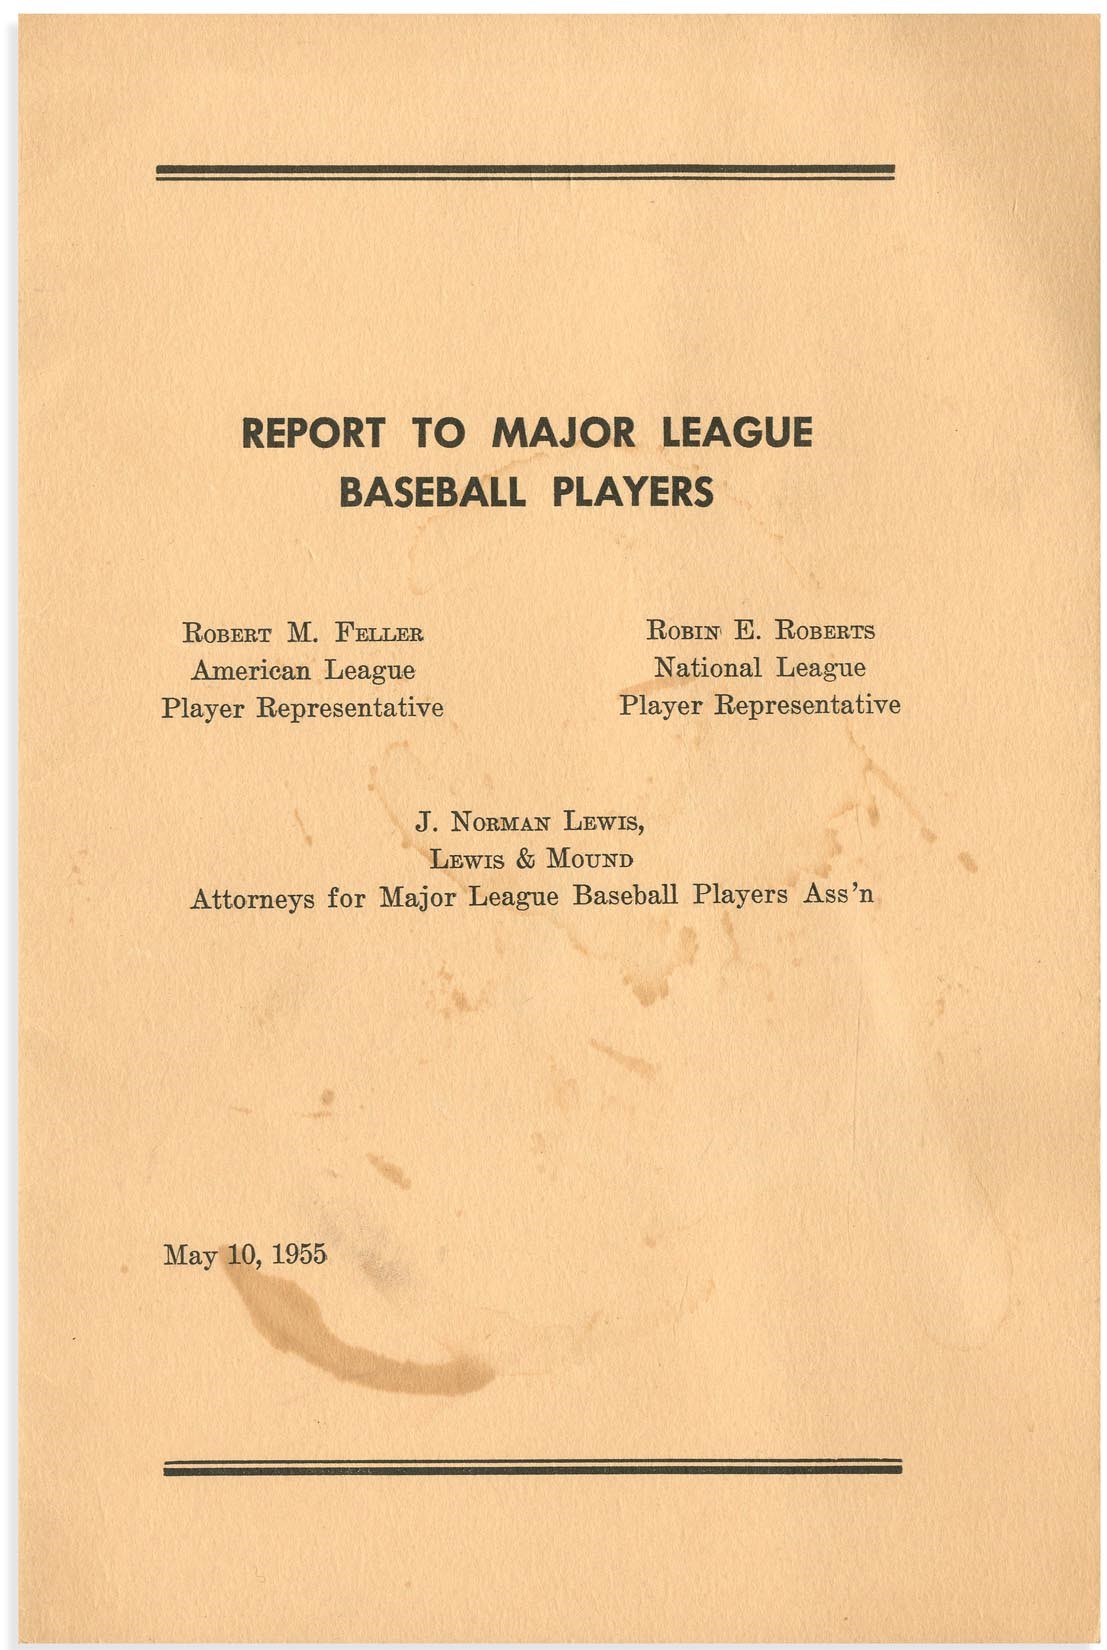 Baseball Memorabilia - 1955 Report to Major League Baseball Players Manual